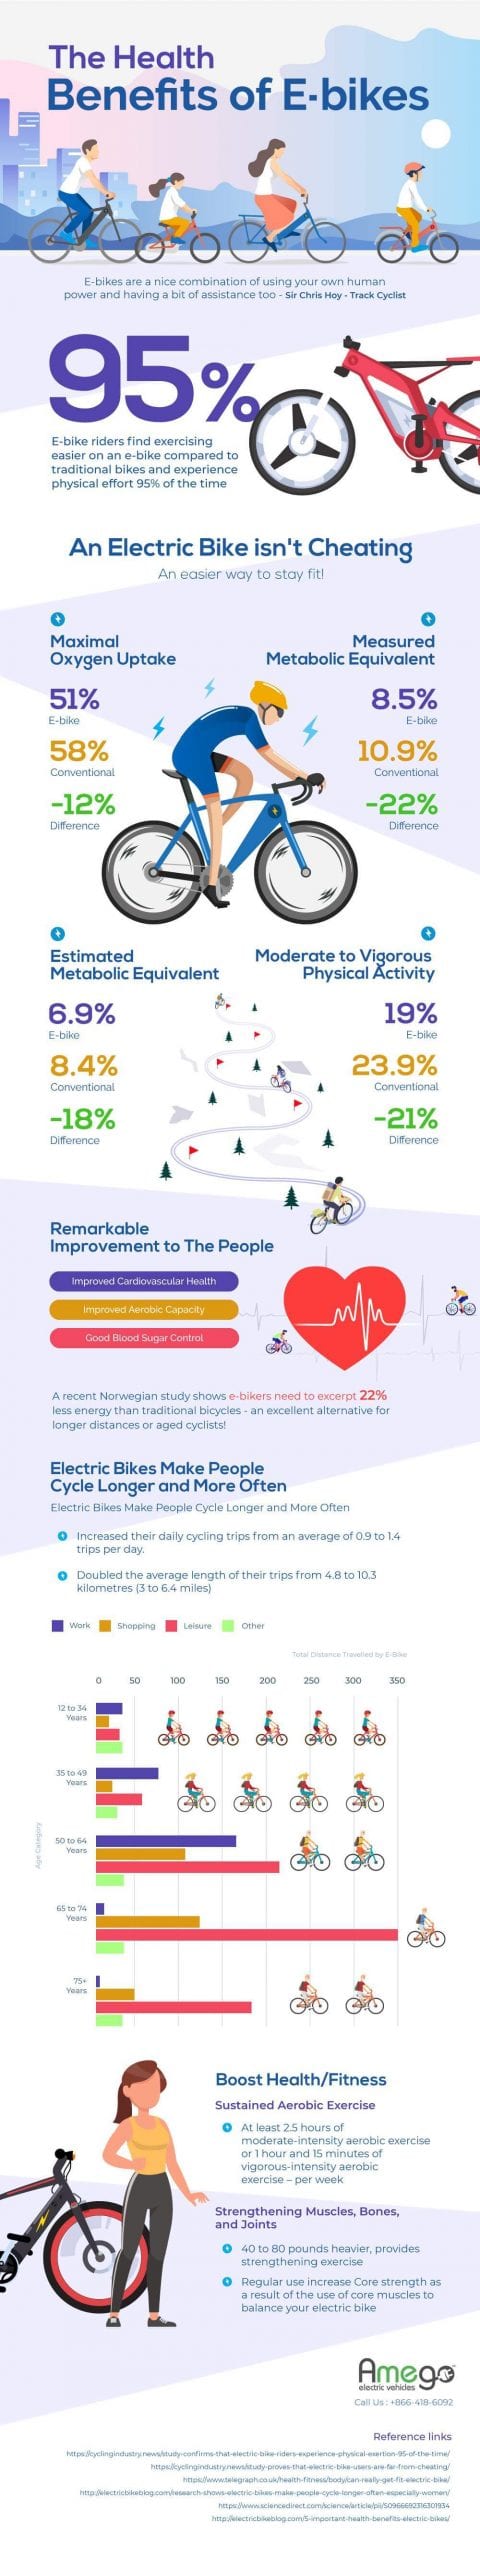 The Health Benefits of E-bikes